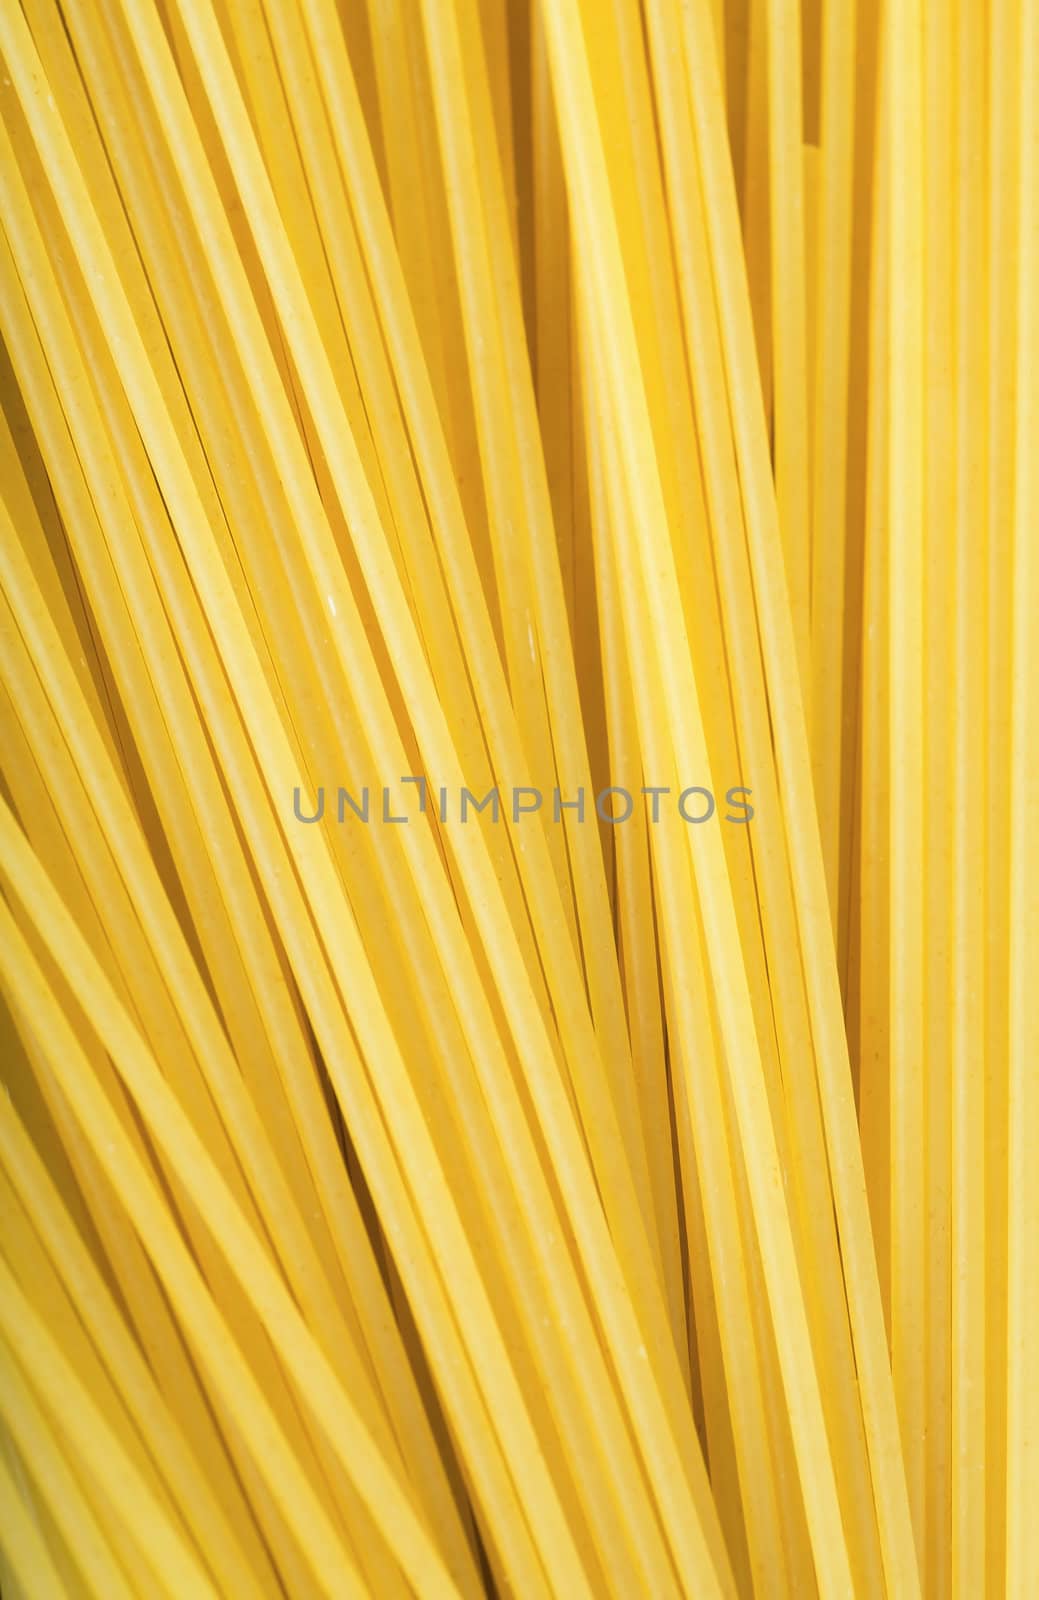 Bunch of spaghetti by AGorohov